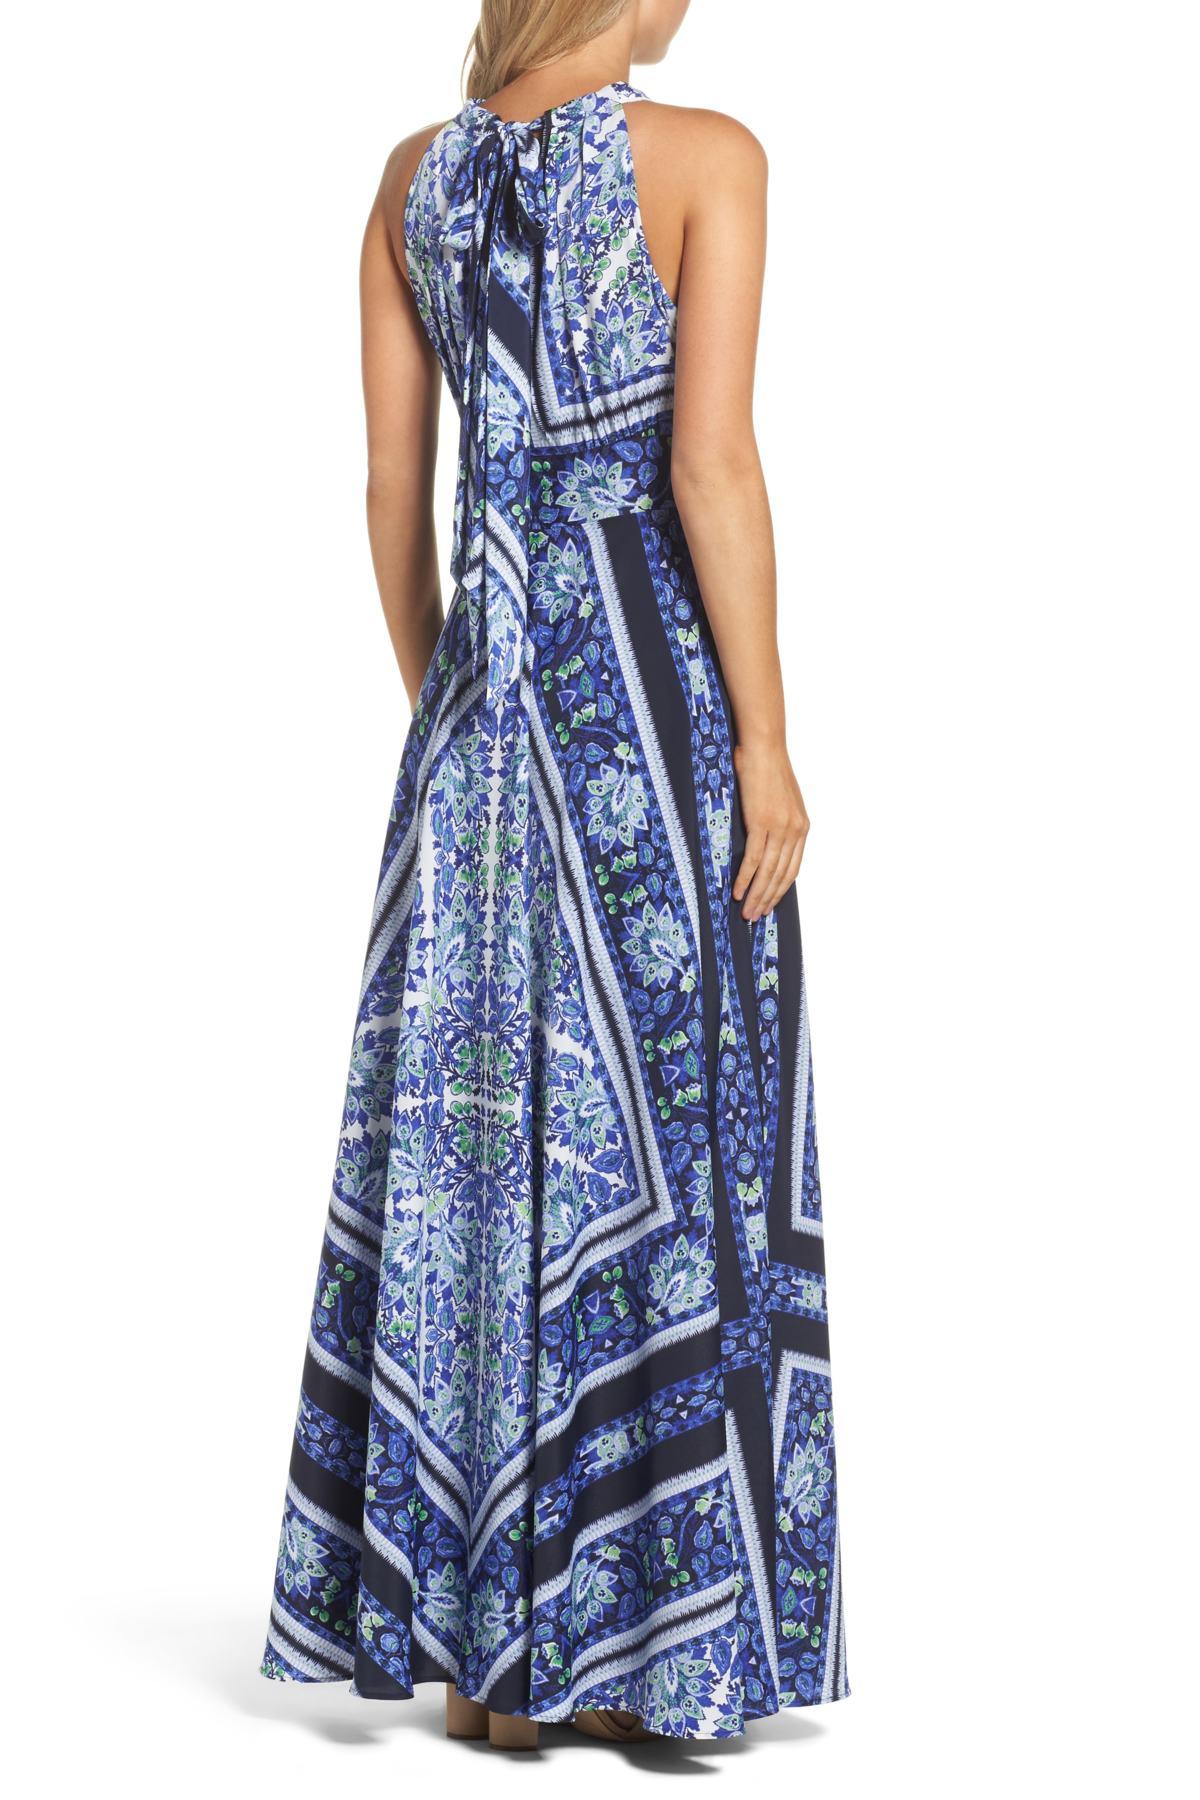 Eliza J Scarf Print Maxi Dress in Navy/ Purple (Blue) - Lyst